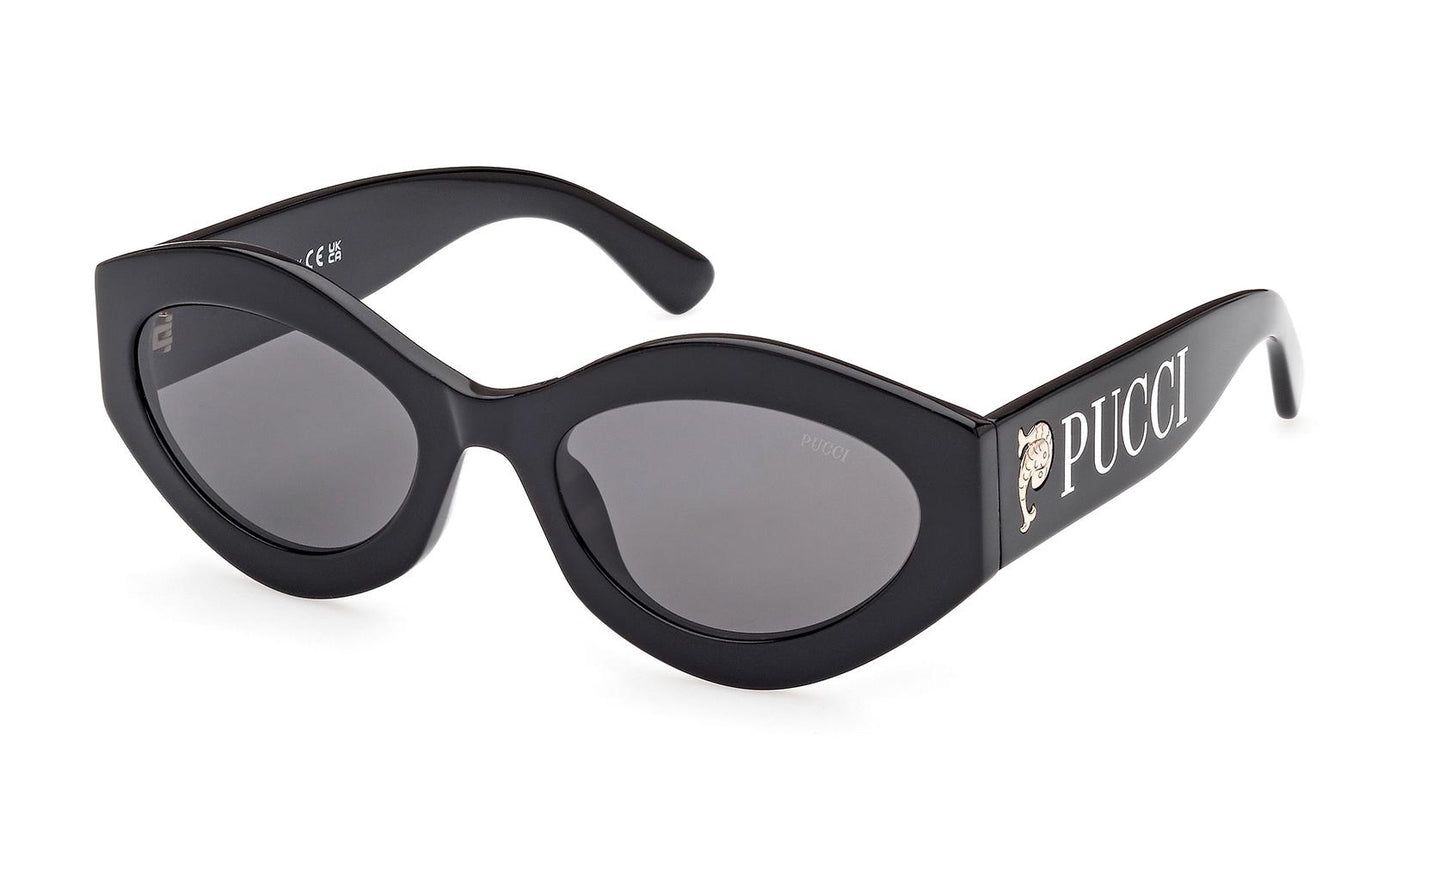 Emilio Pucci Sunglasses EP0208 01A